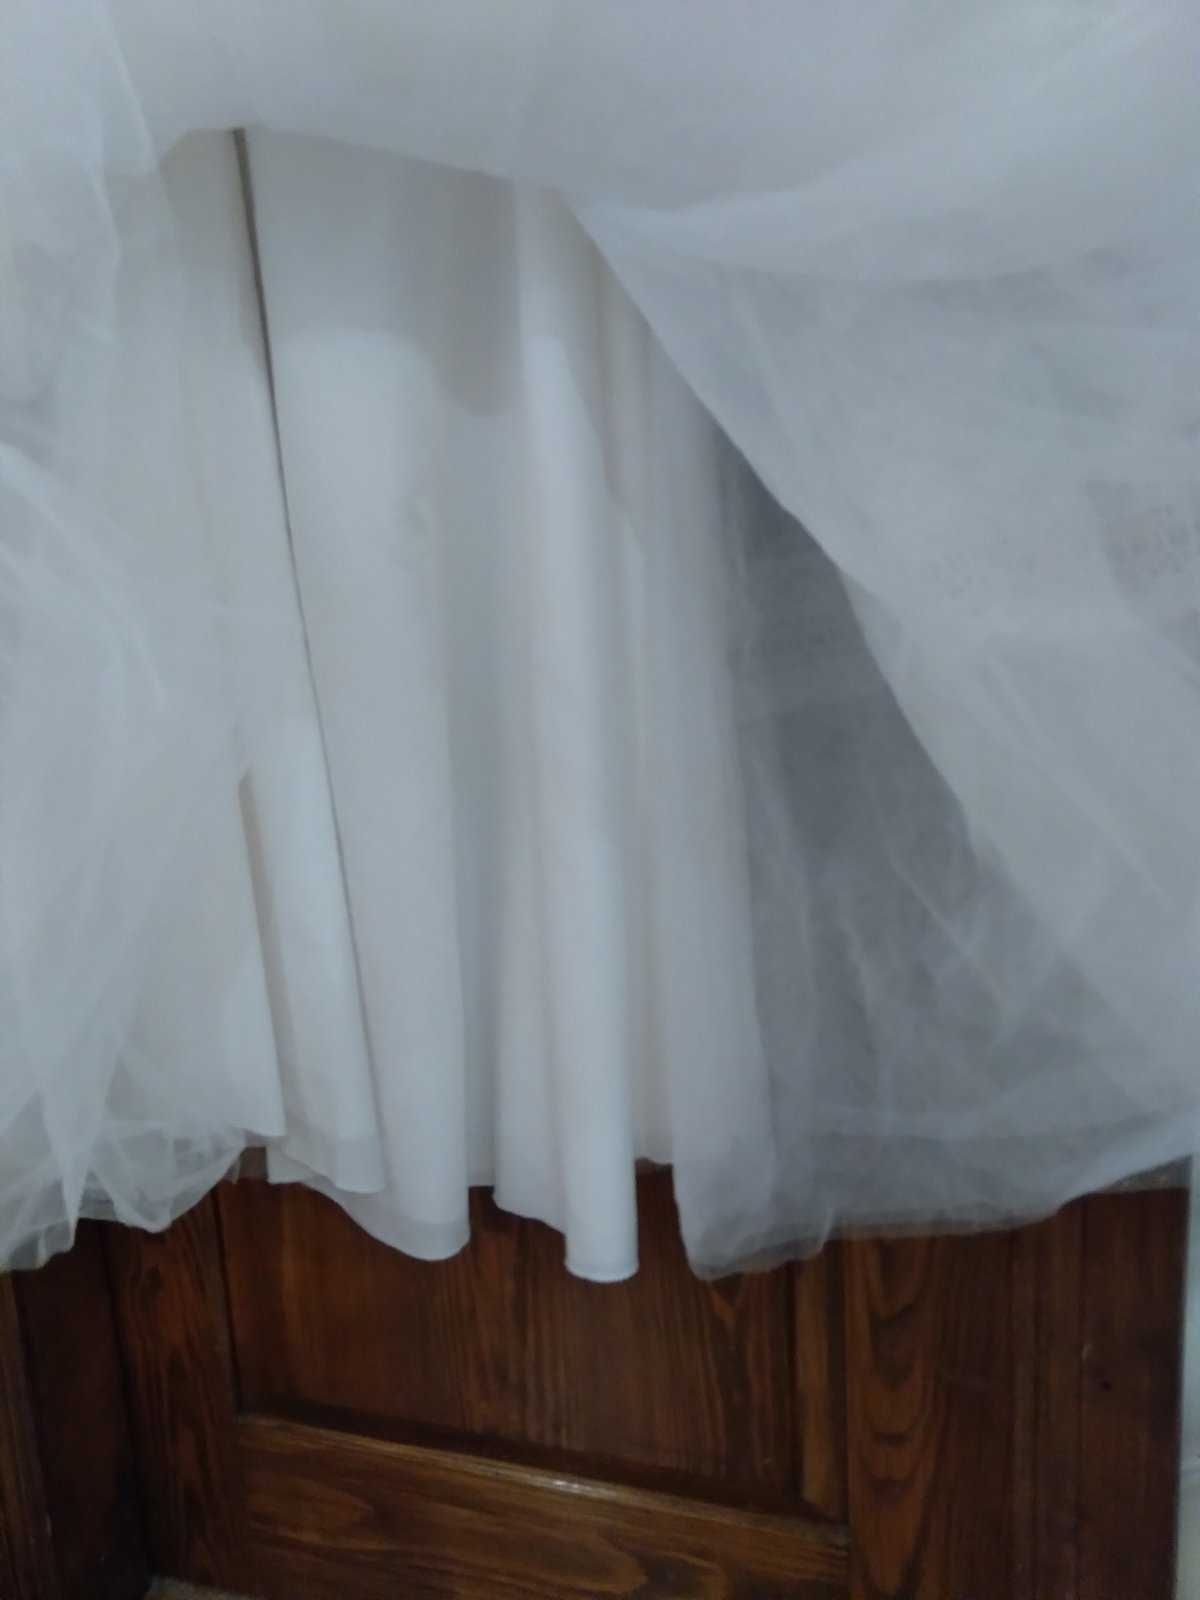 весільне плаття свадебное платье 42-44